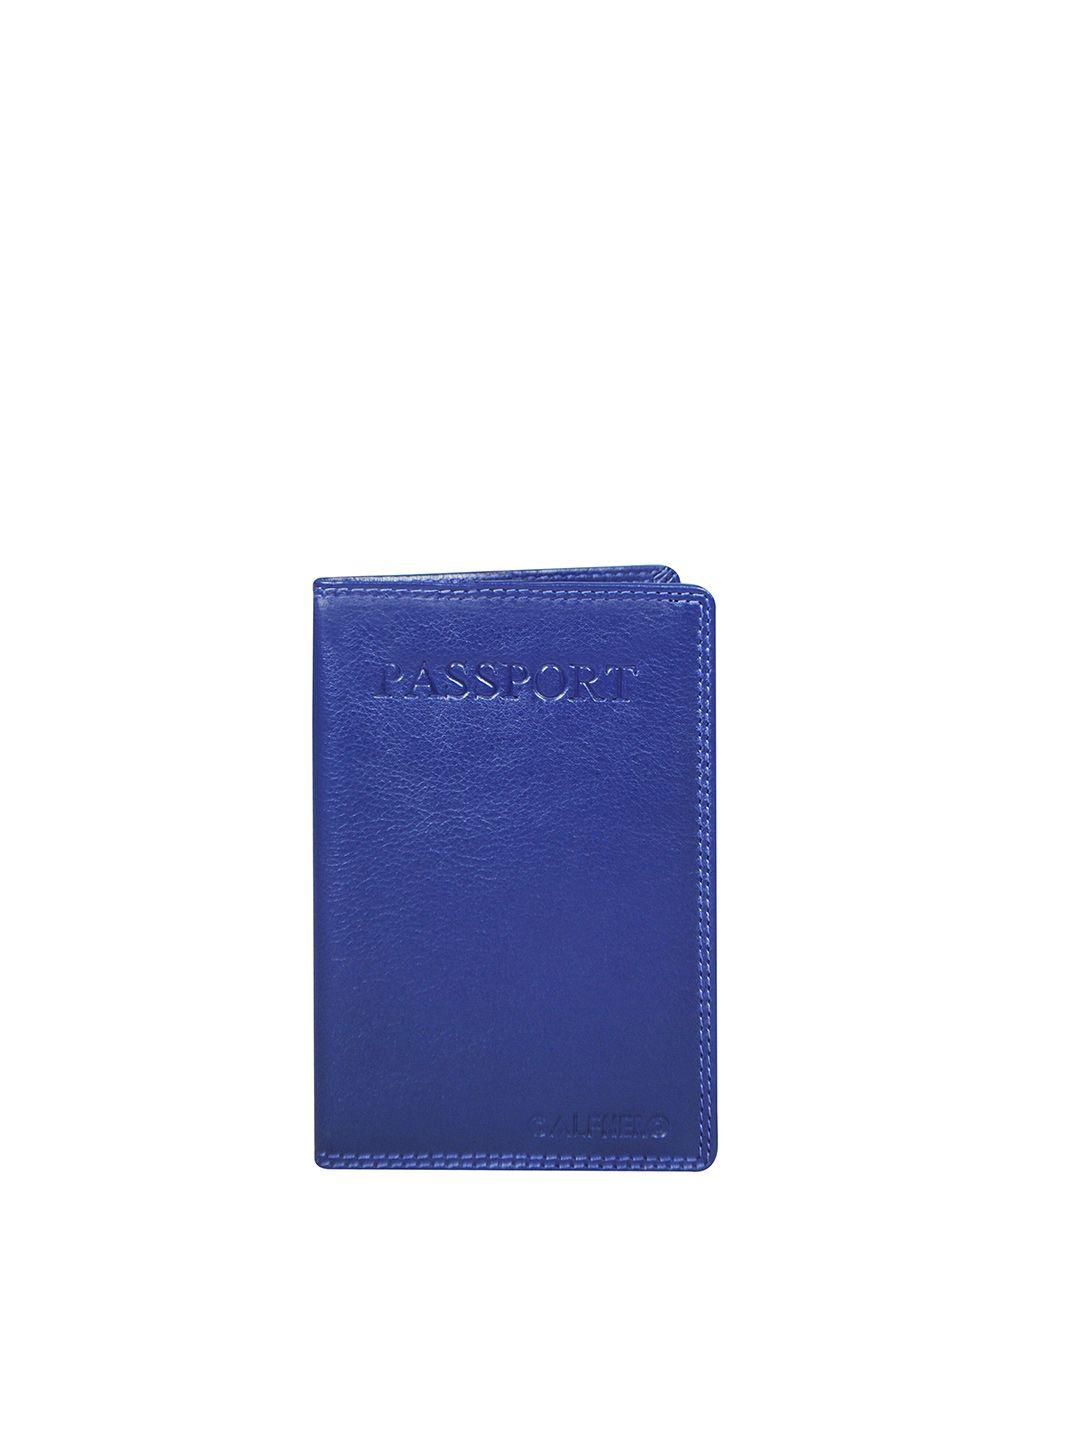 calfnero unisex purple leather passport holder with passport holder